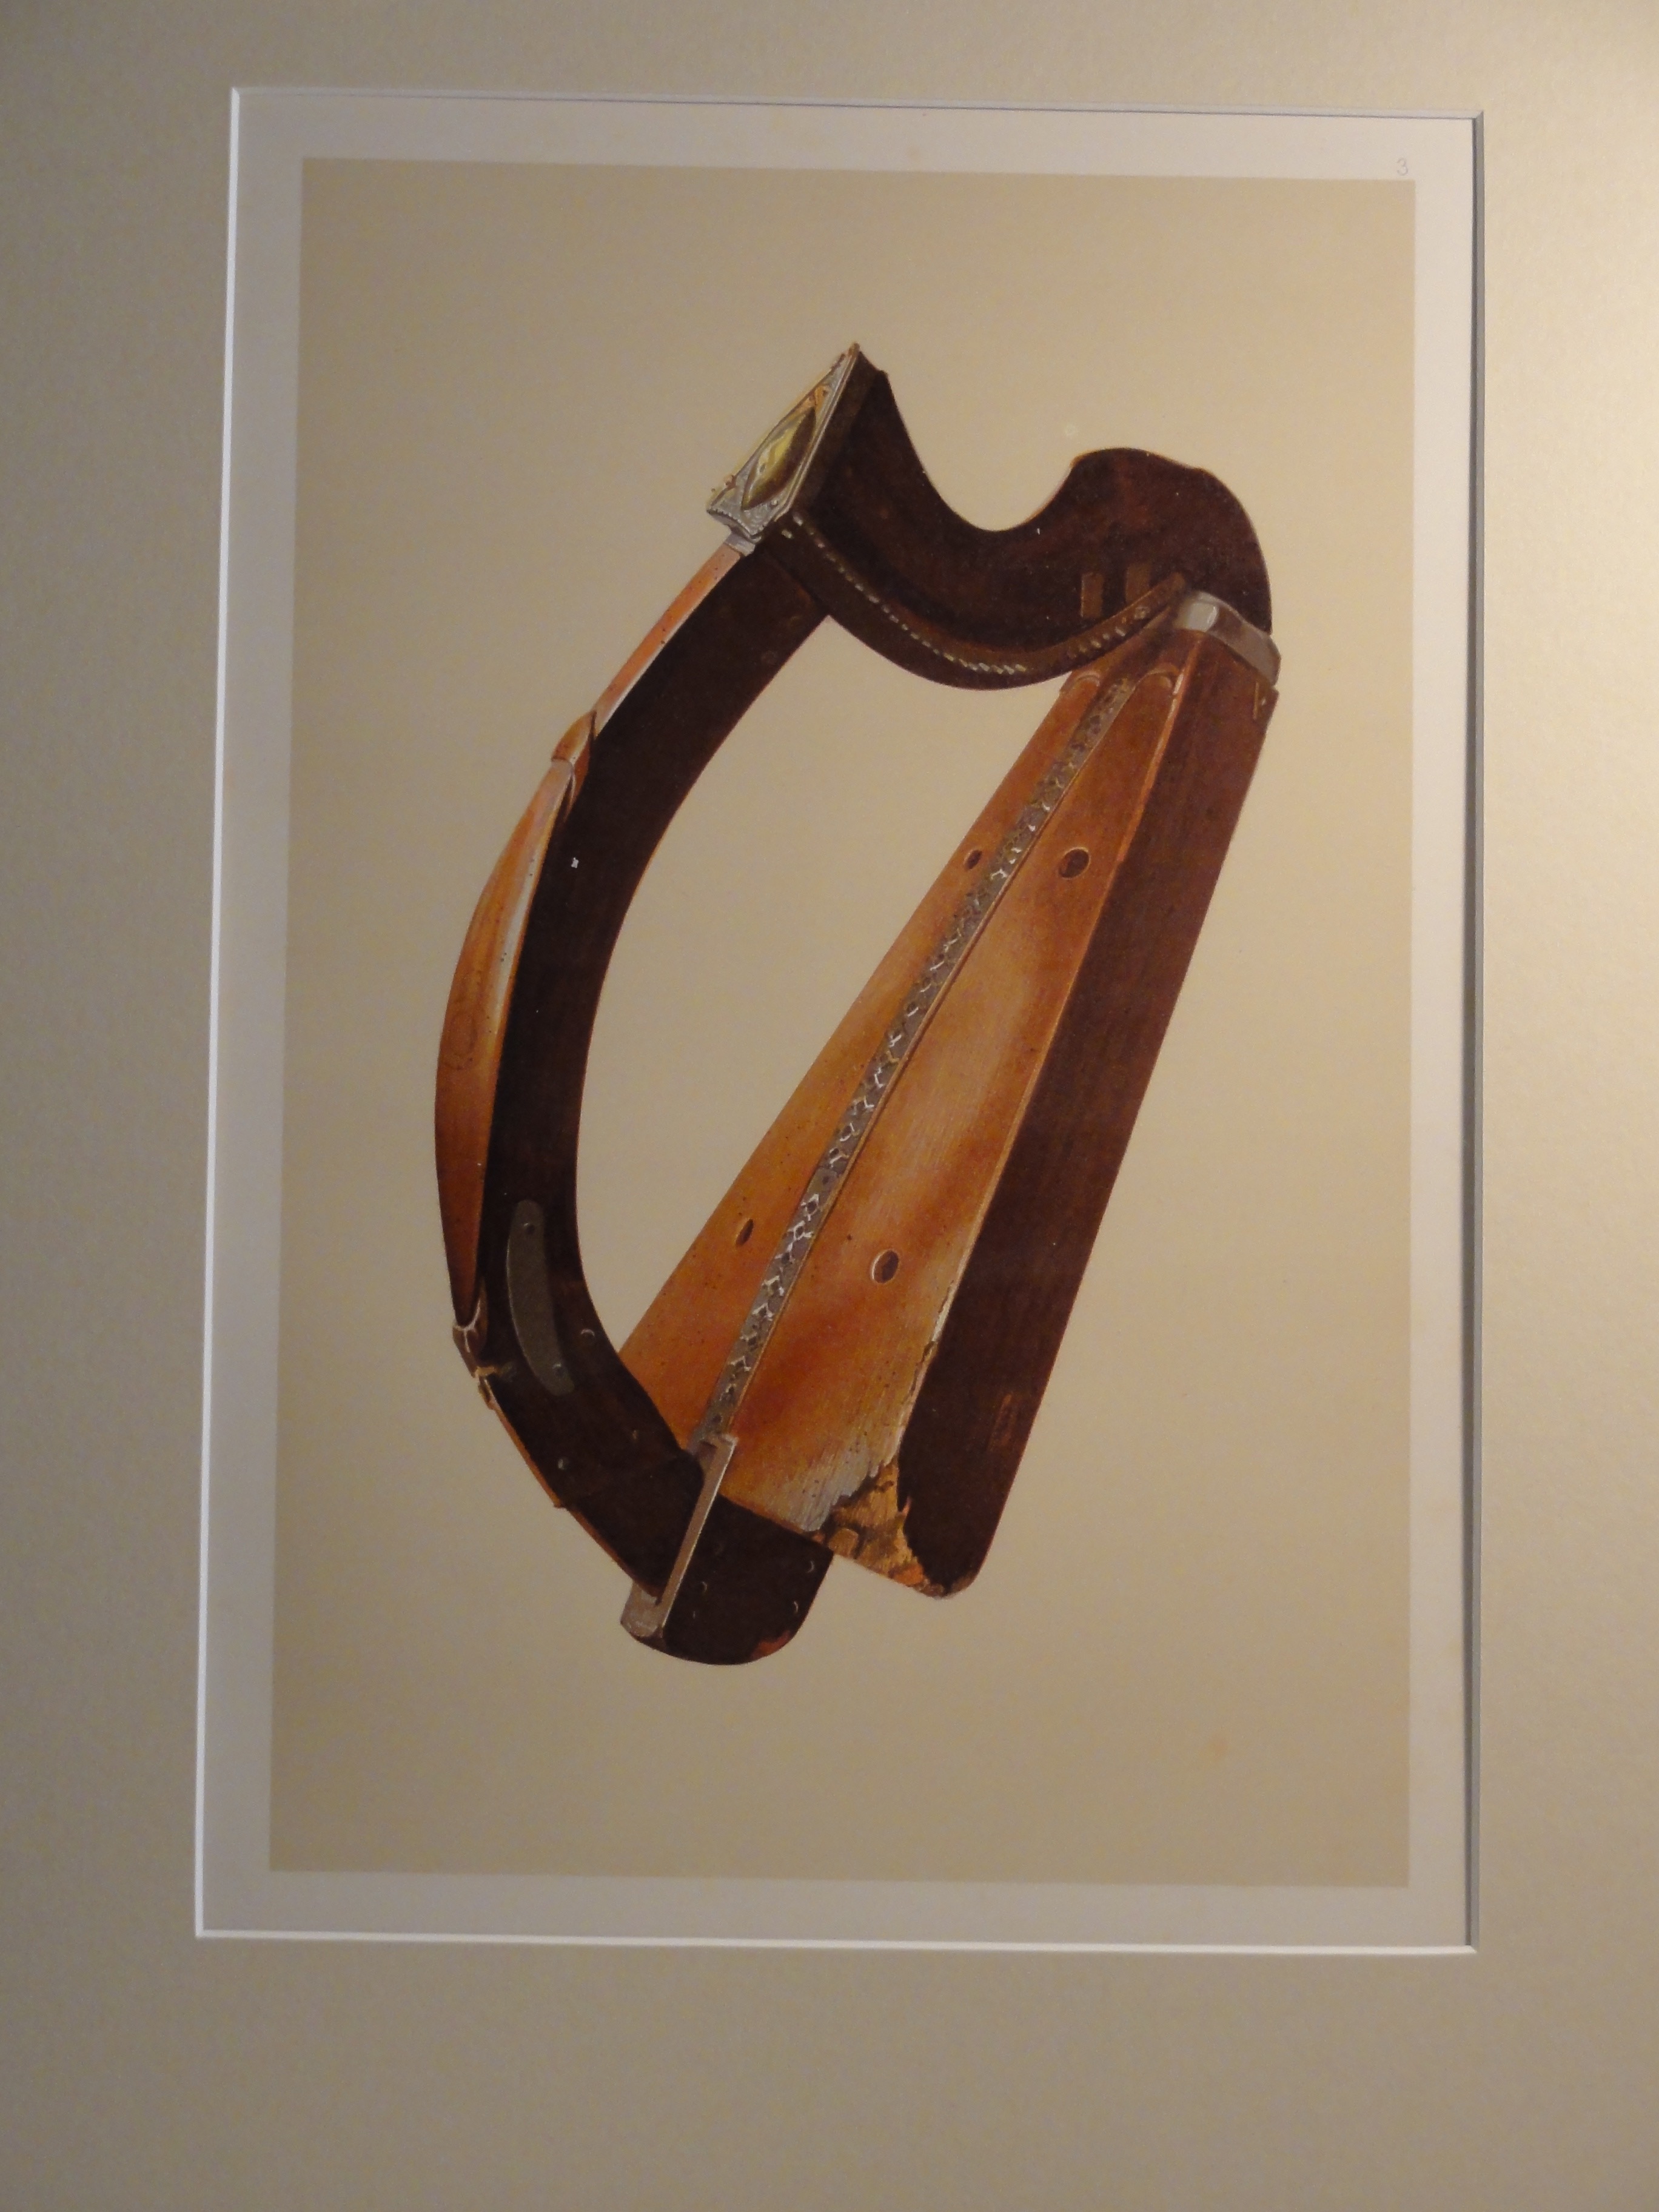 The Lamont Harp